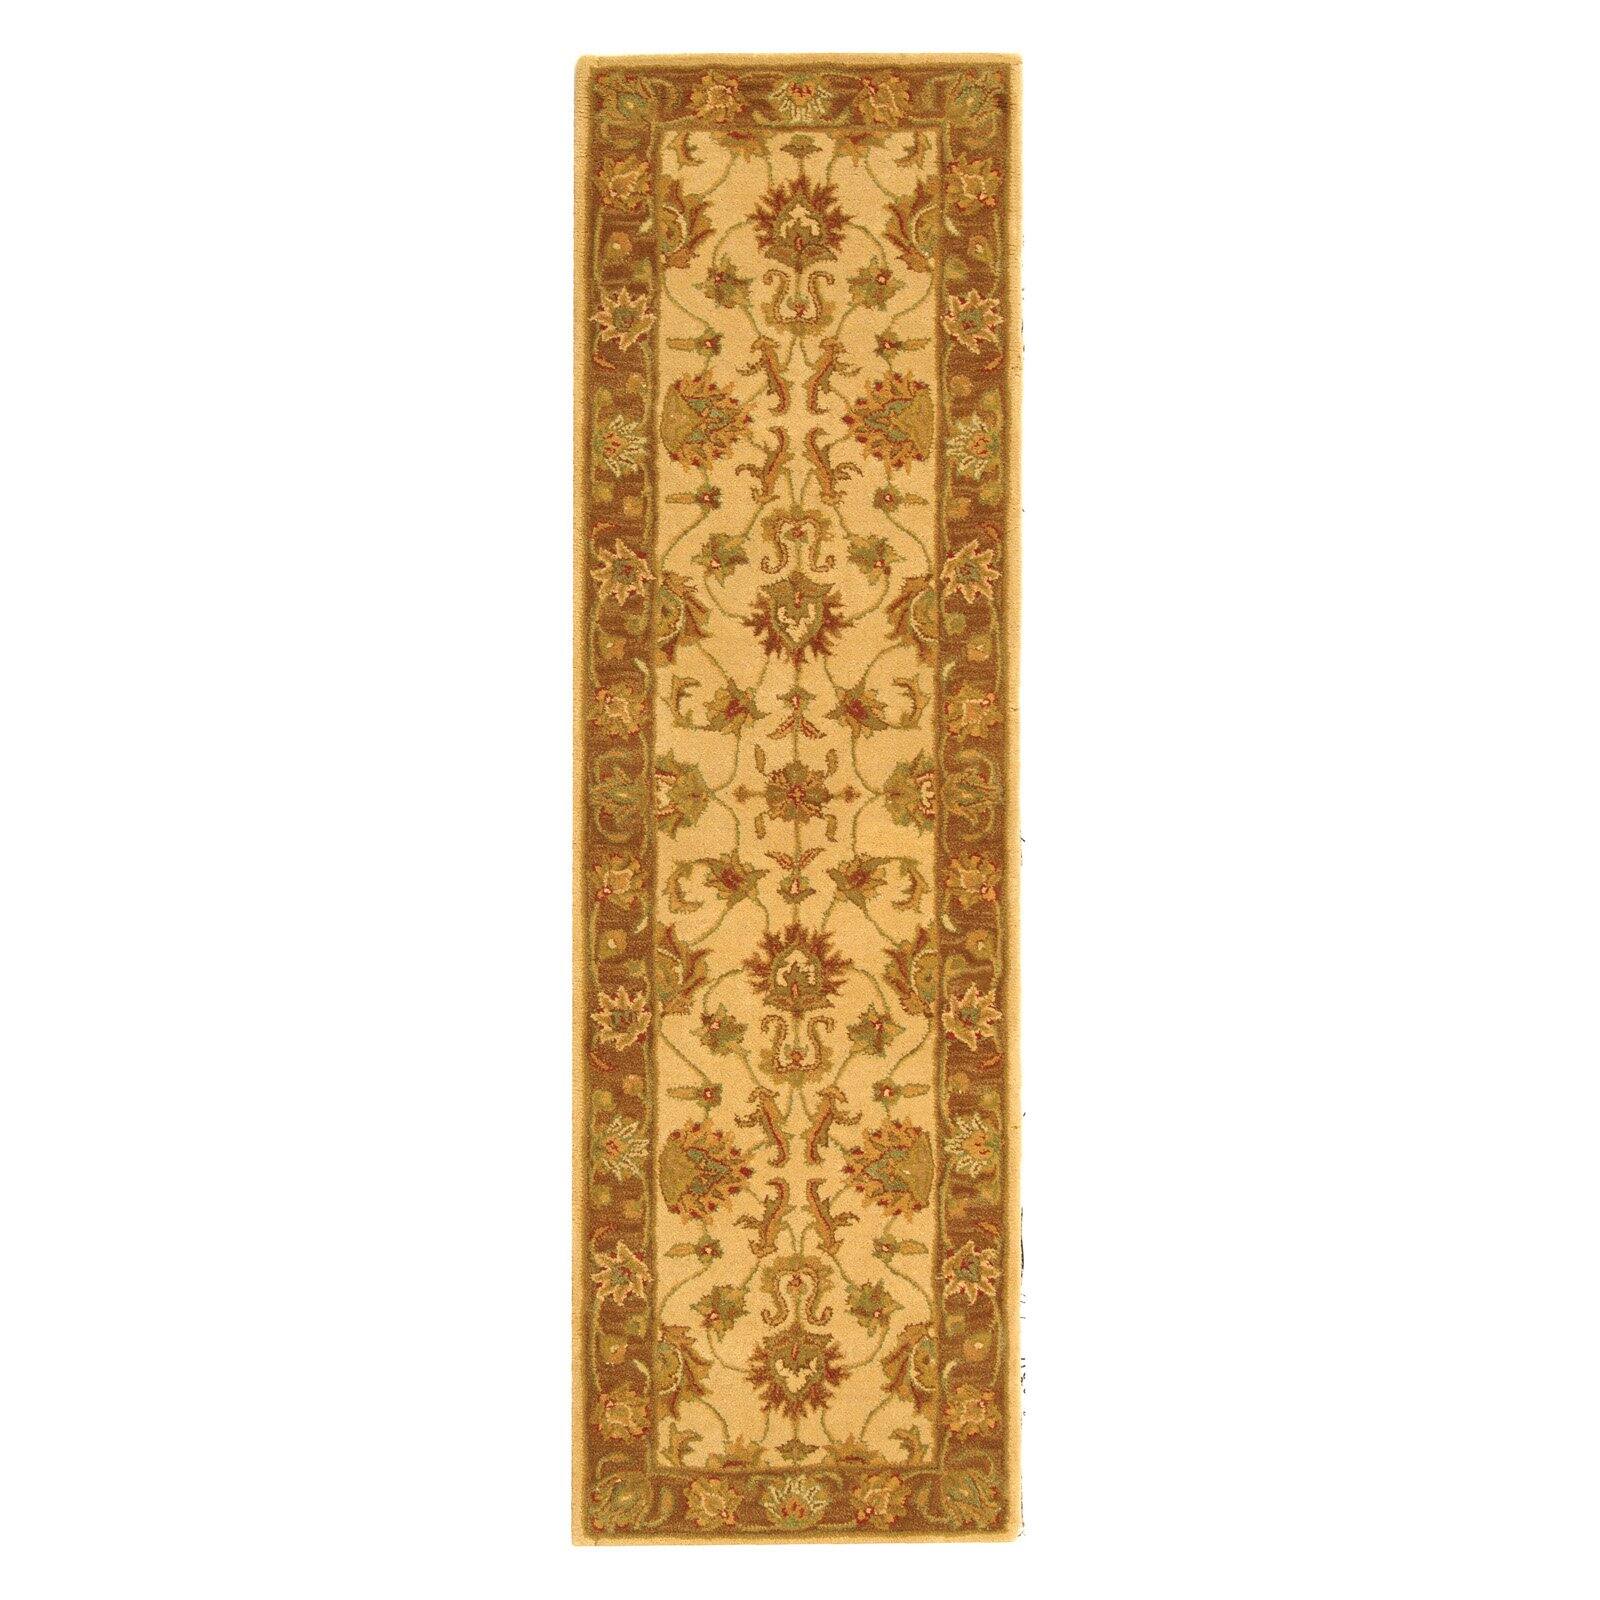 SAFAVIEH Heritage Regis Traditional Wool Area Rug, Ivory/Brown, 7'6" x 9'6" Oval - image 4 of 9